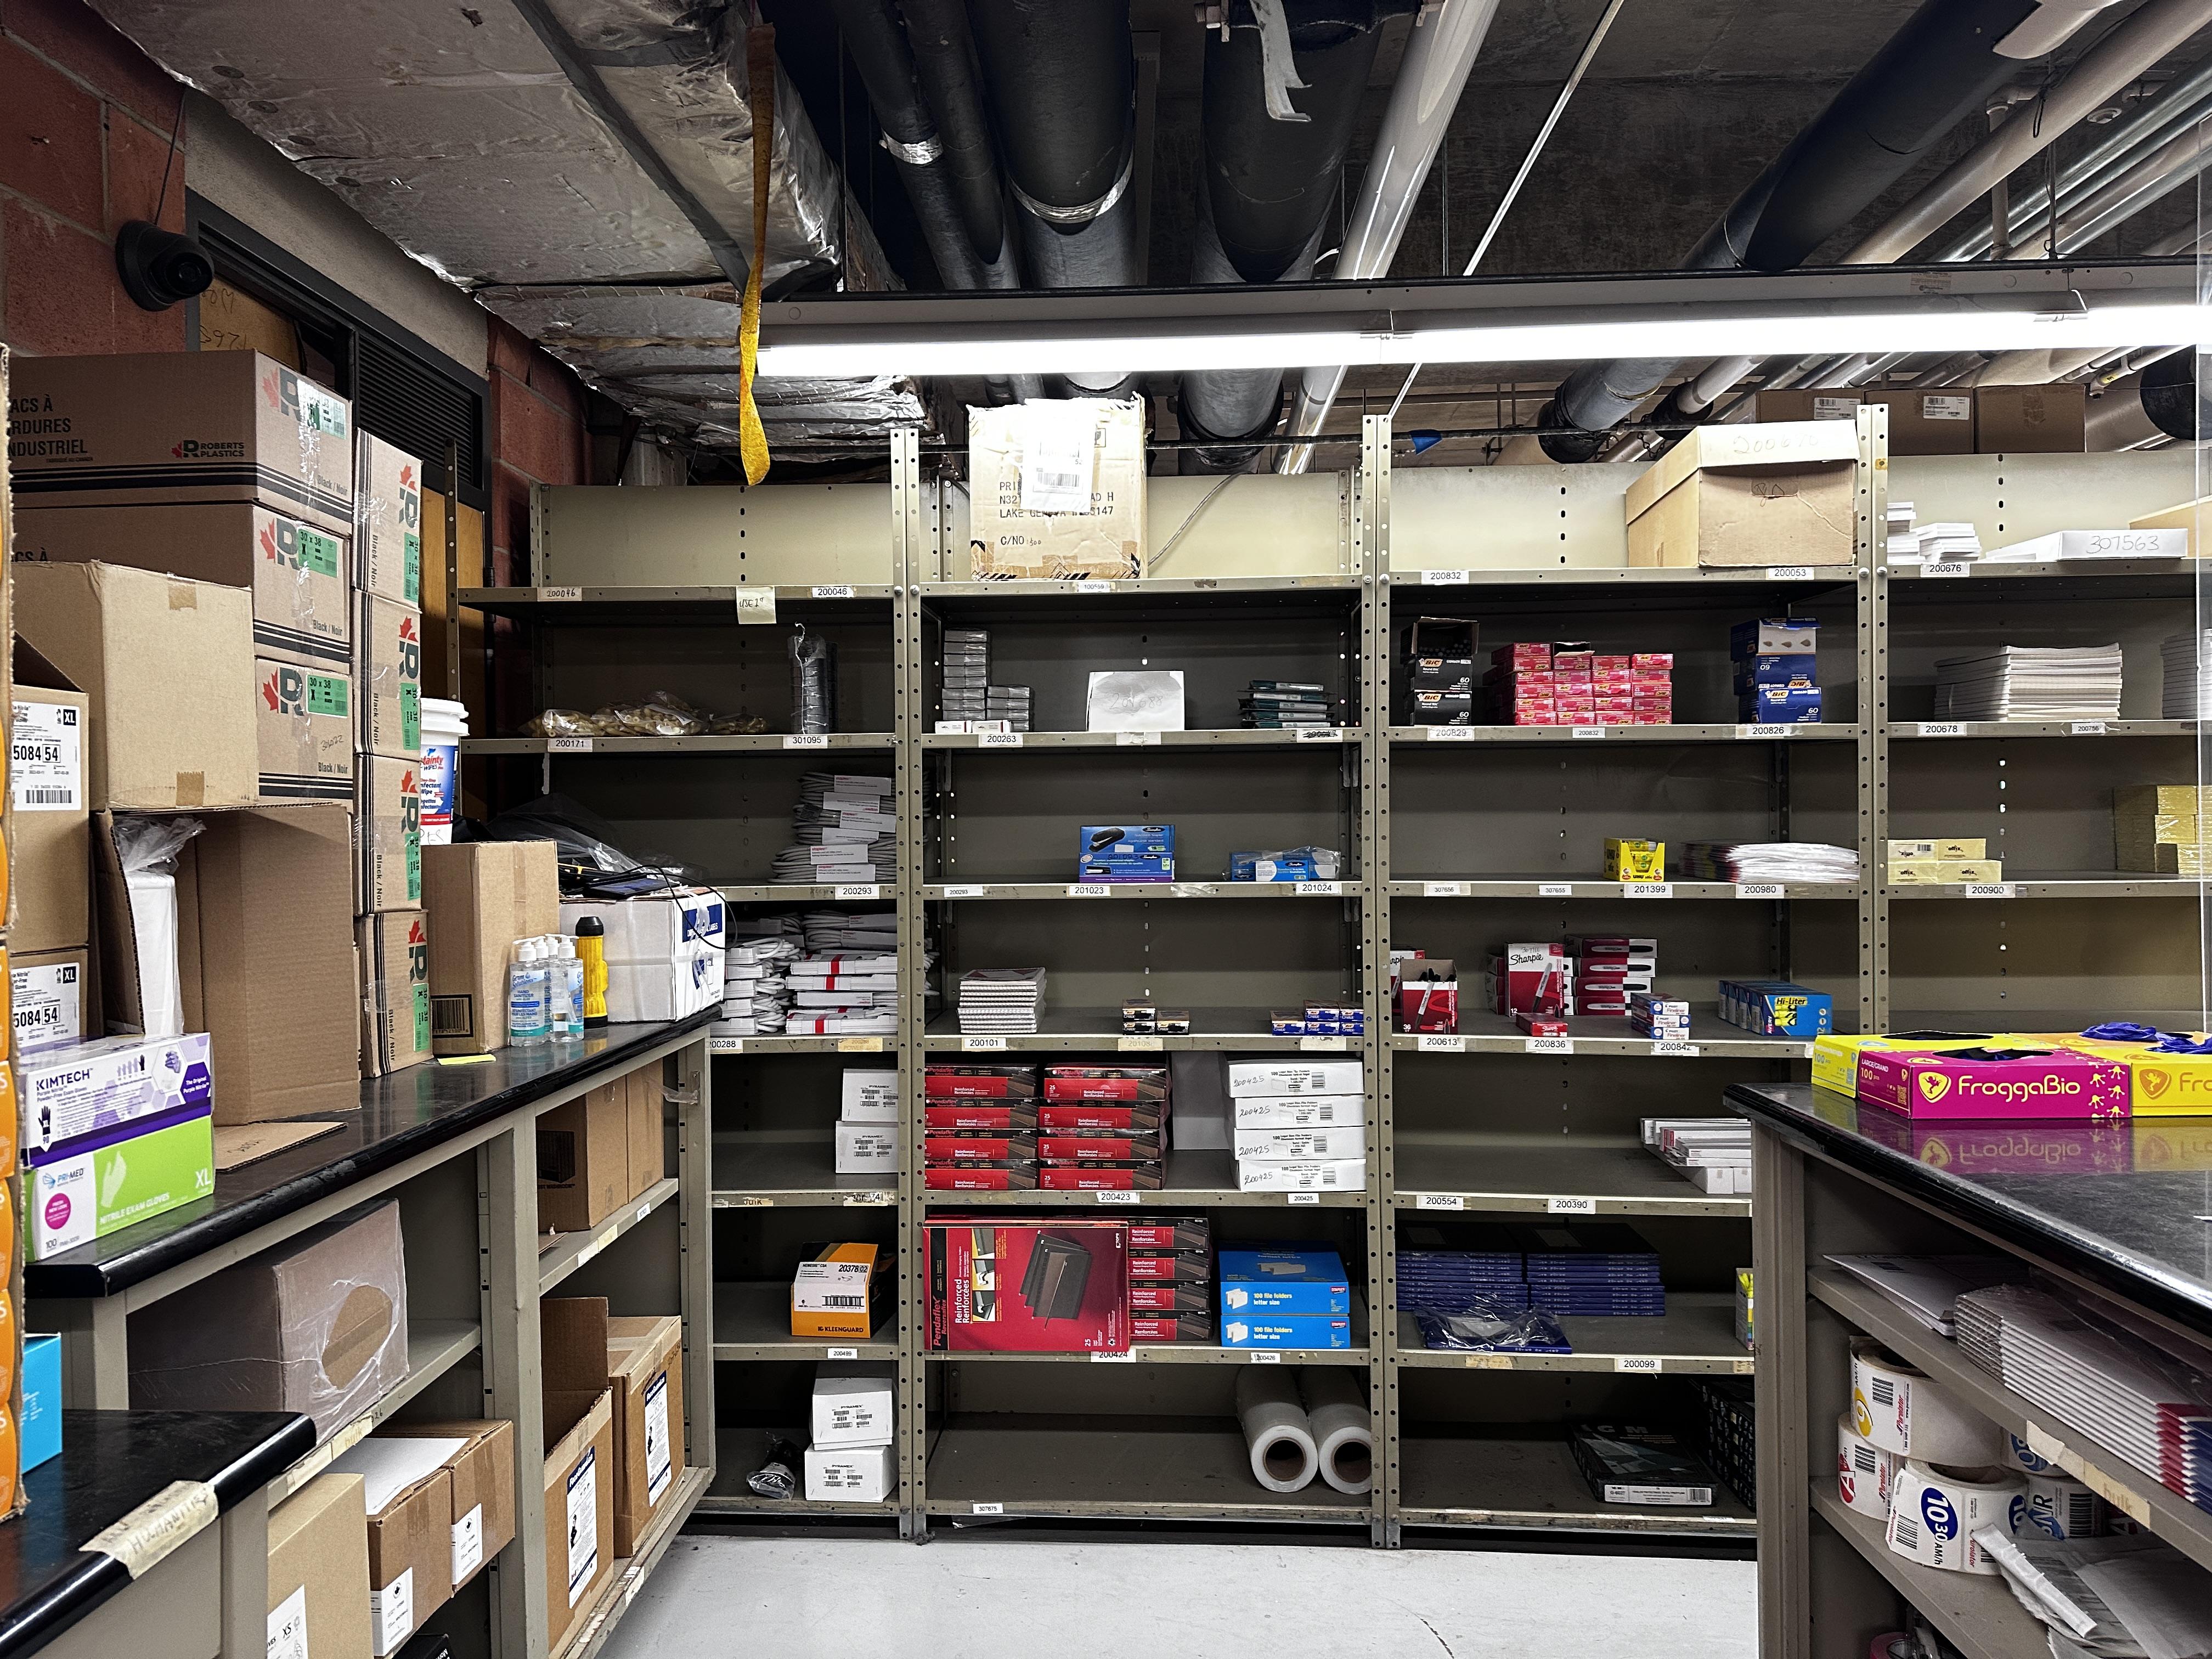 The storeroom at UTSC